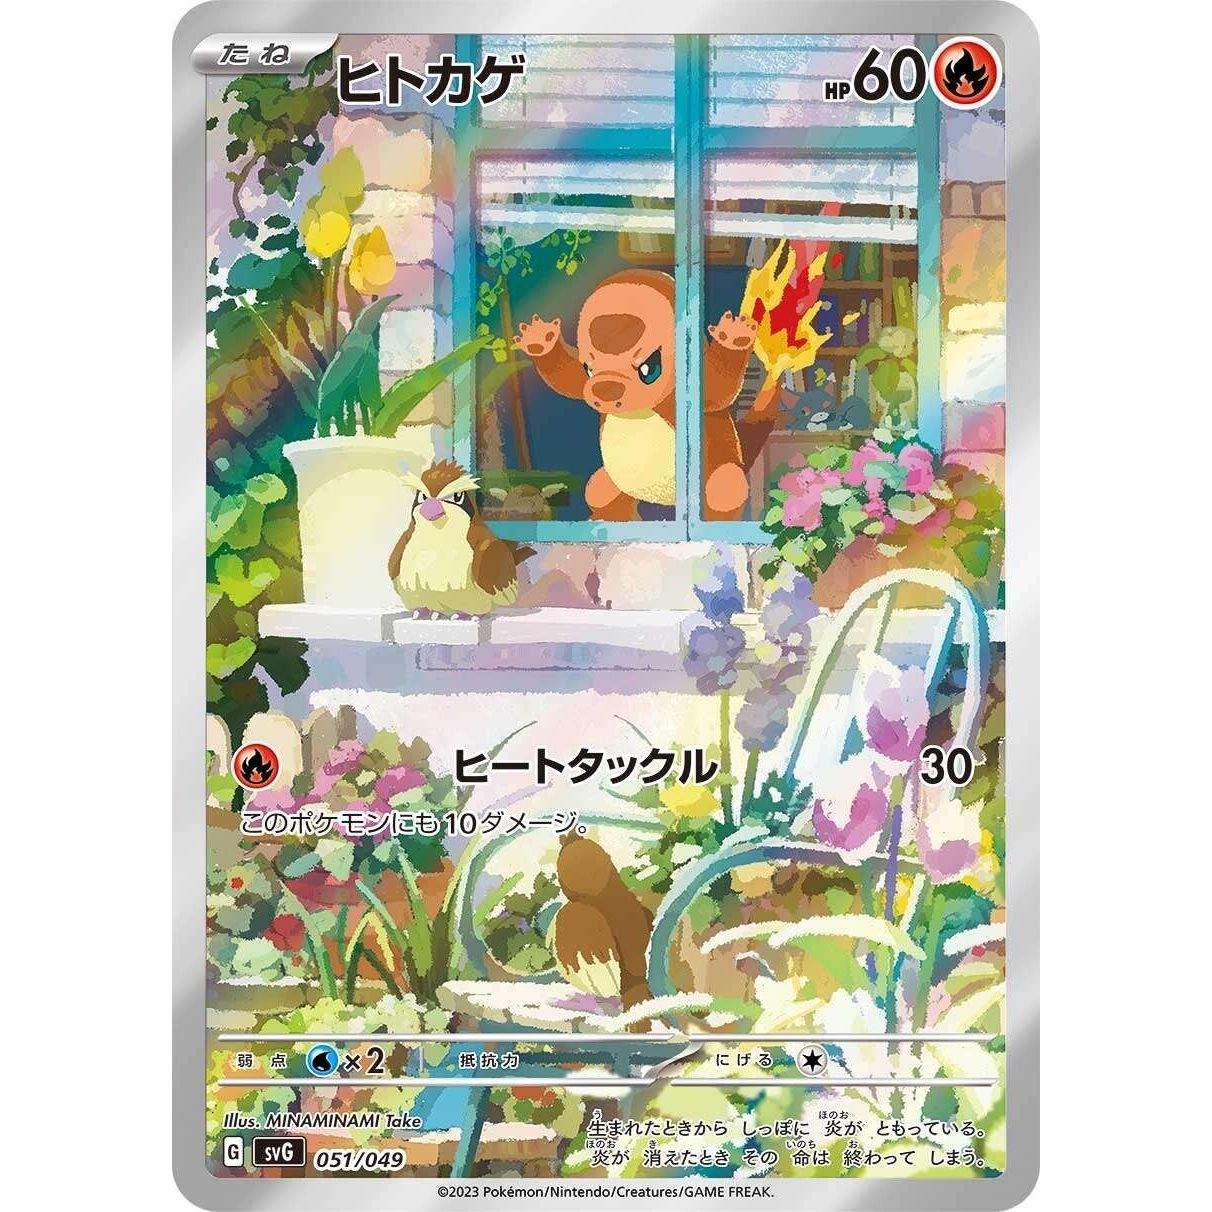 Pokémon TCG: Scarlet & Violet Special Deck Set ex - Venusaur, Charizard, Blastoise (Japanese)